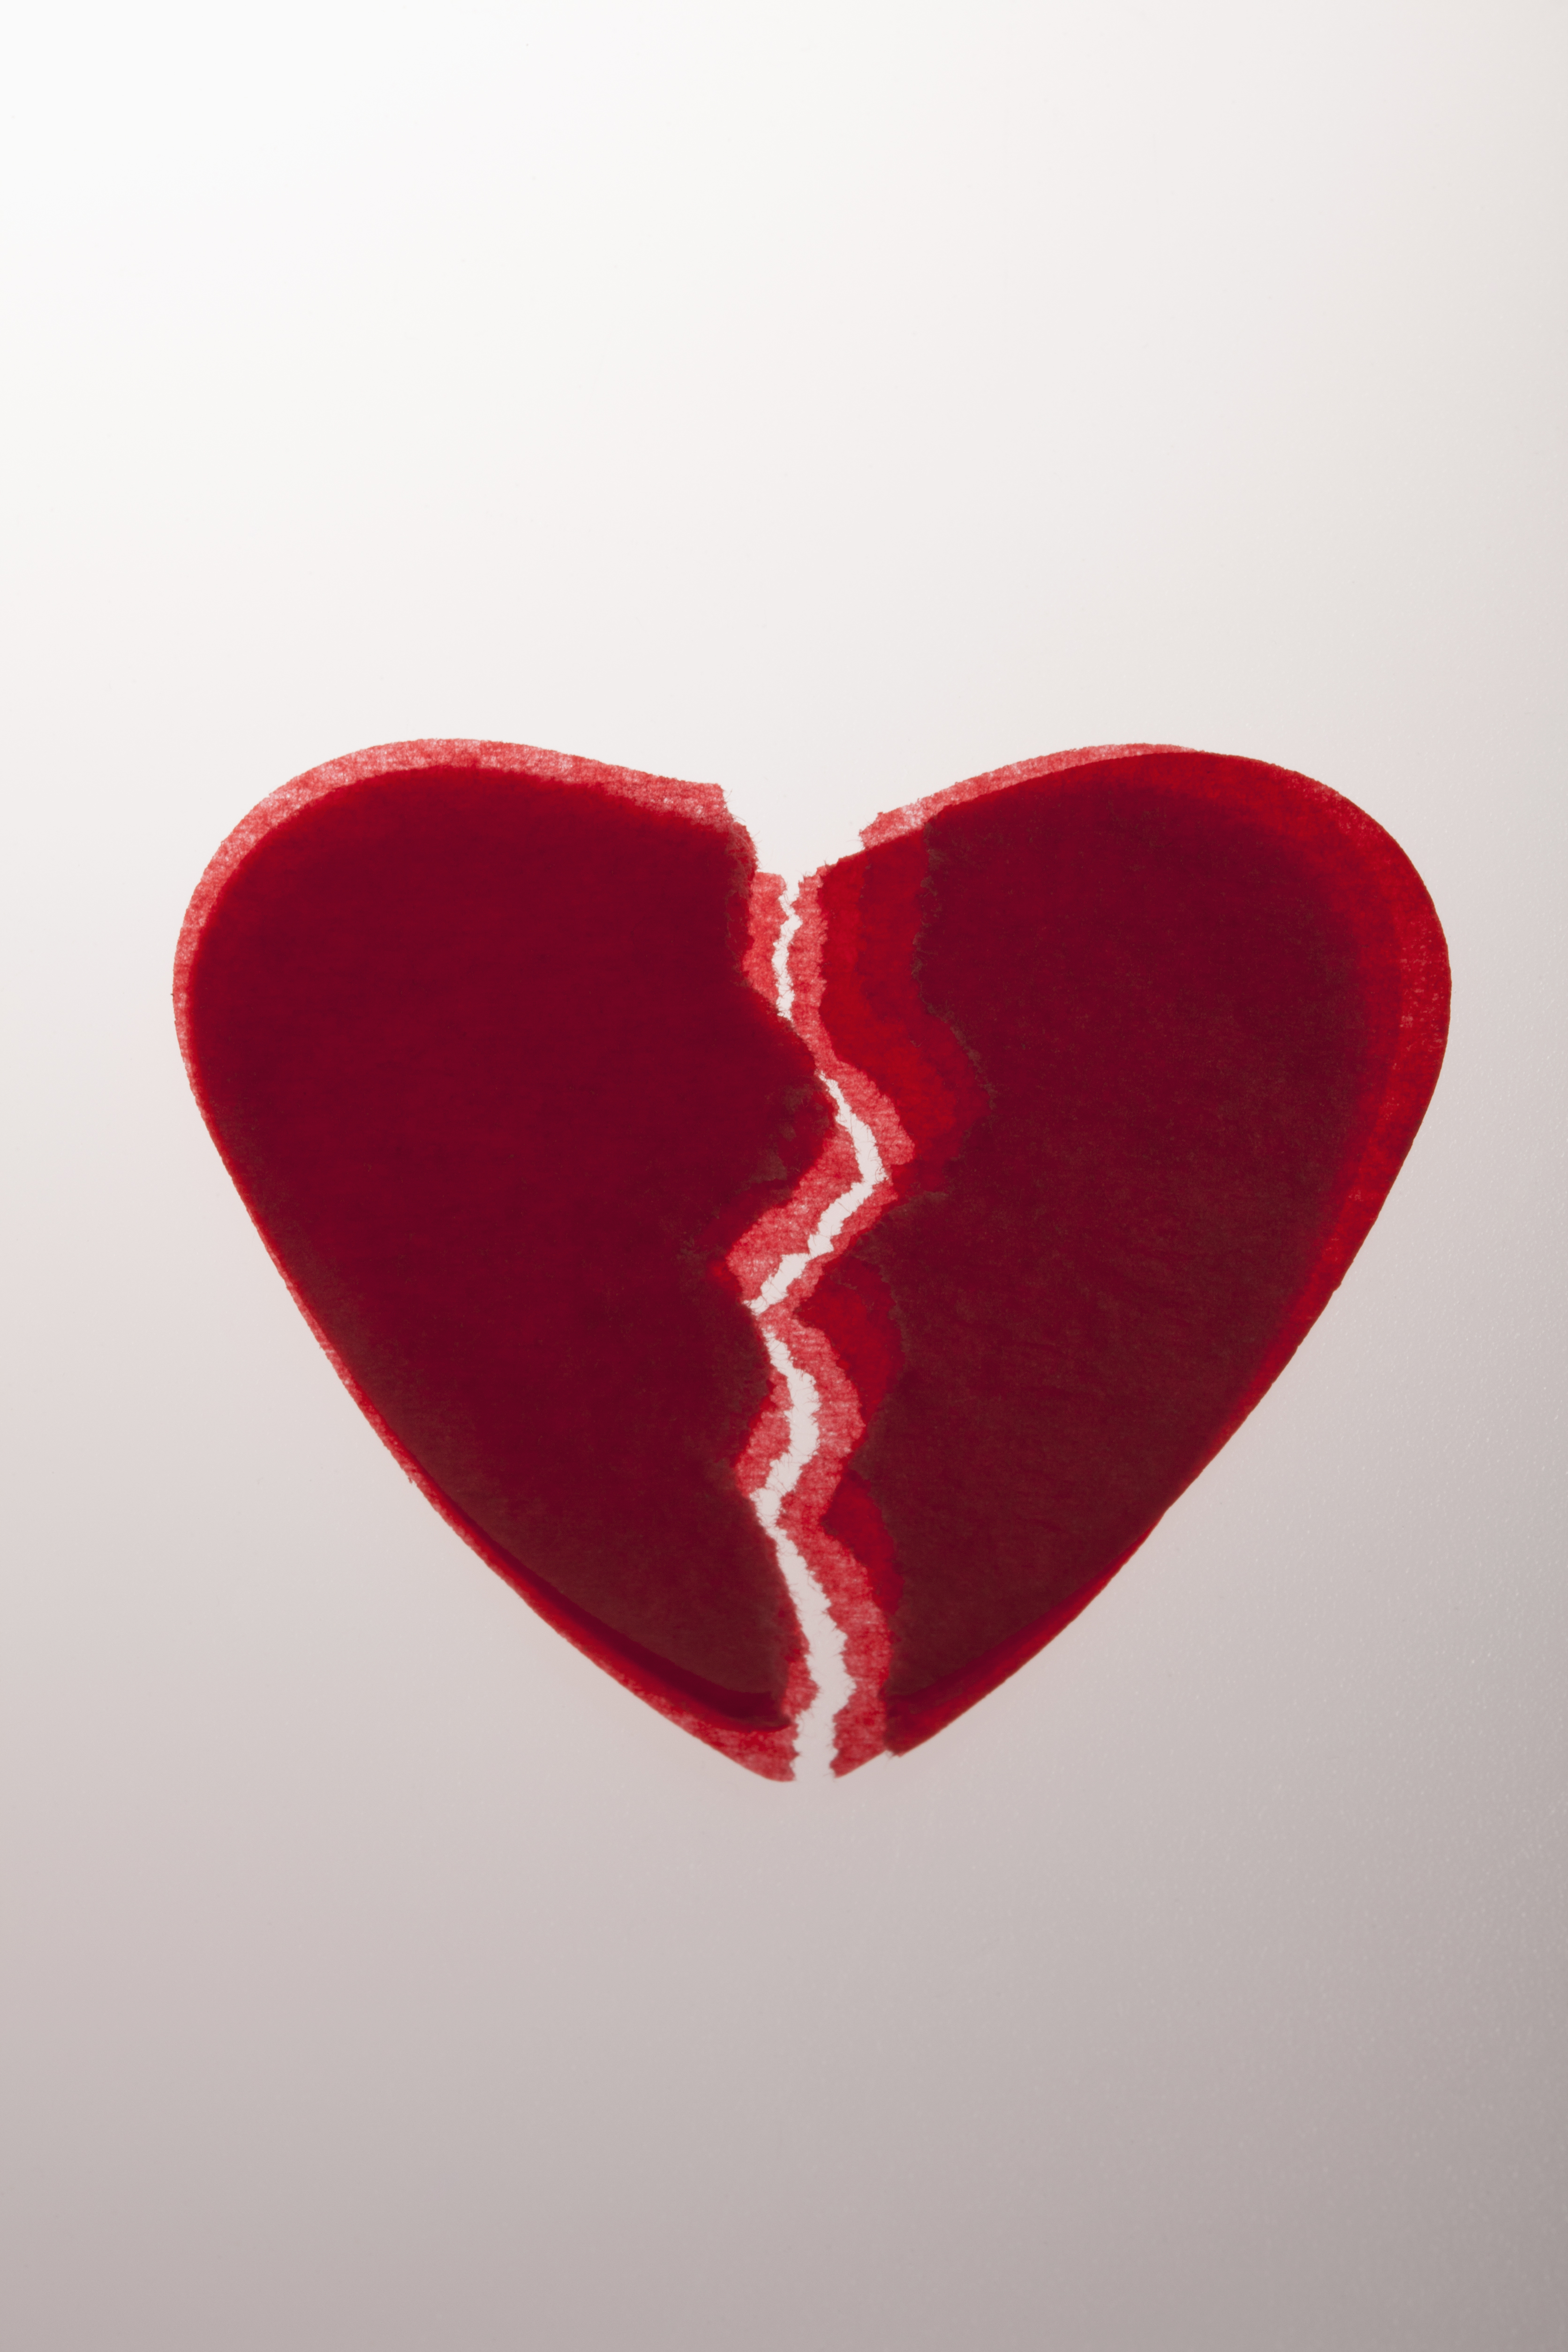 broken-red-heart